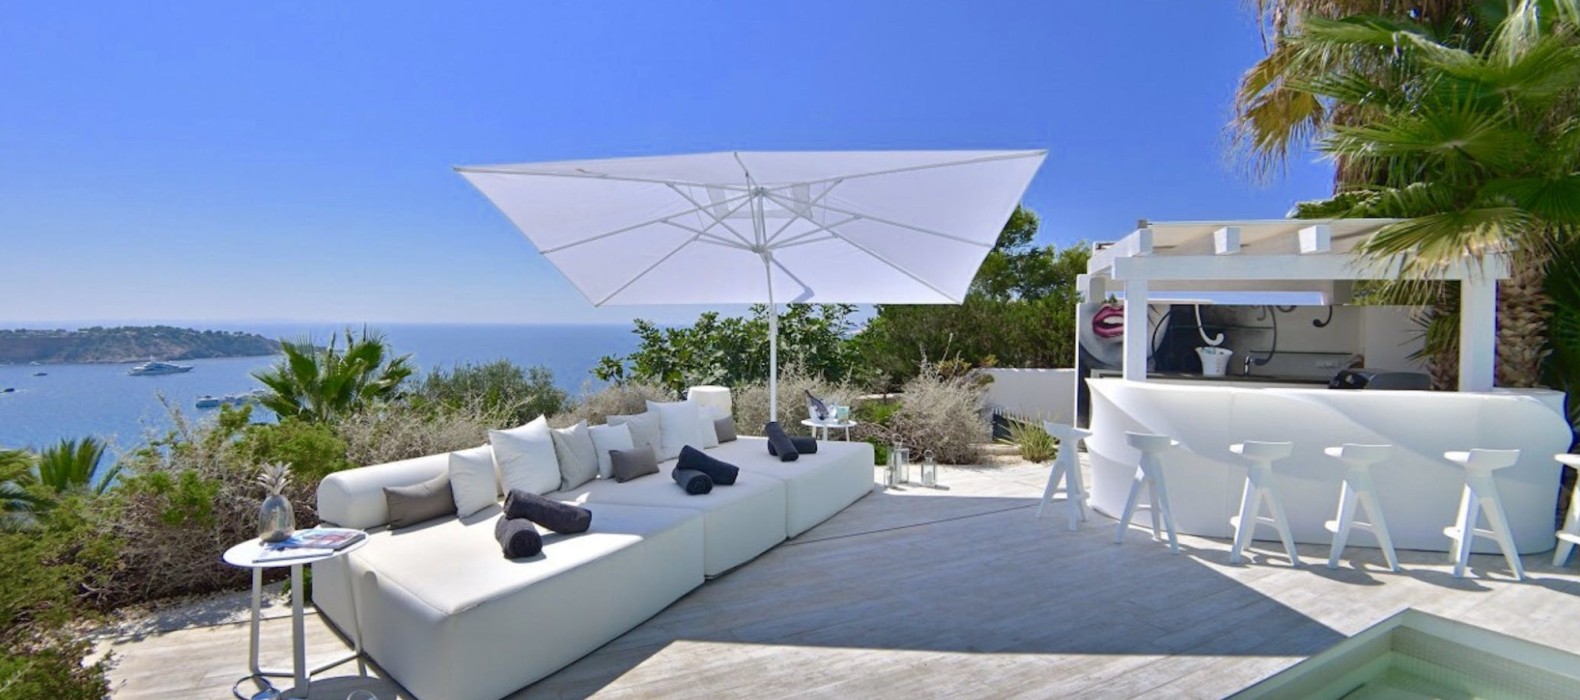 Exterior chill area of Villa Benahavis in Ibiza